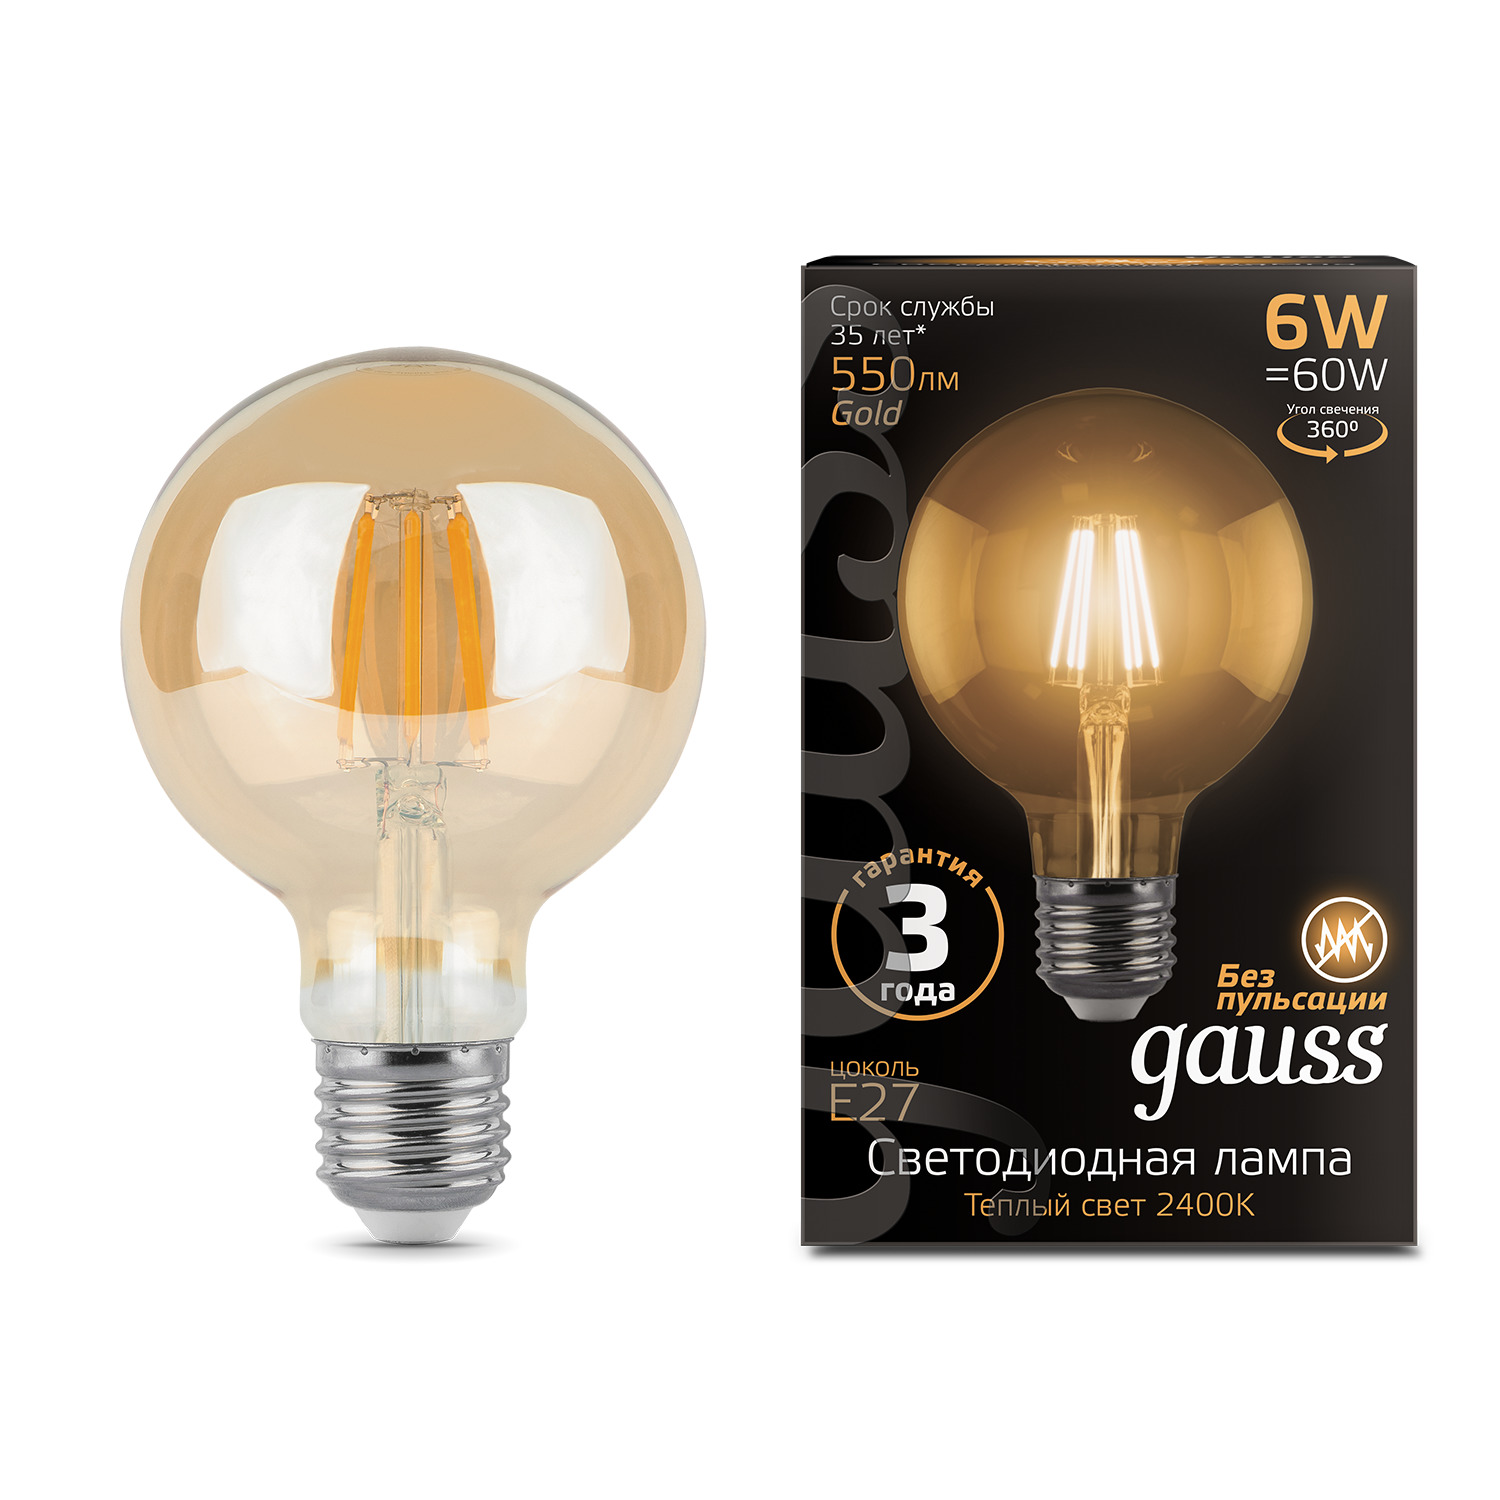 Лампа Gauss LED Filament G95 E27 6W Golden 550lm 2400K 1/20 лампа gauss led filament g95 e27 6w 630lm 2700k 1 20